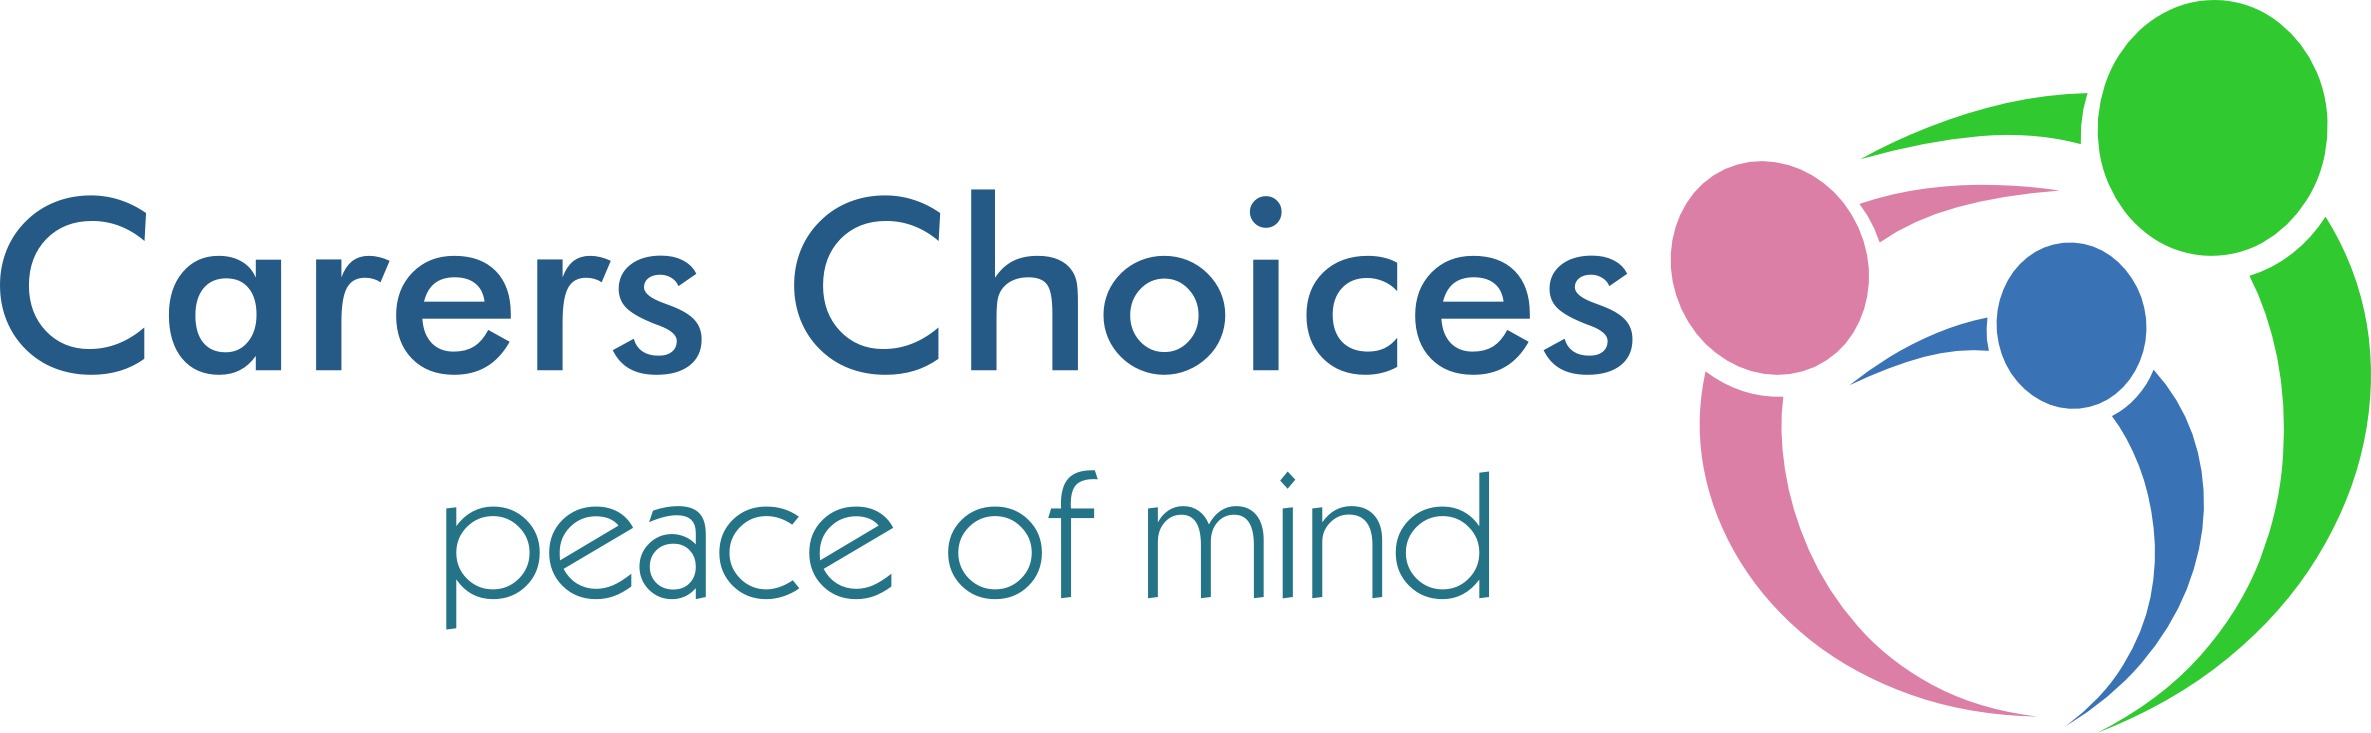 Carers Choices Home Help Service logo